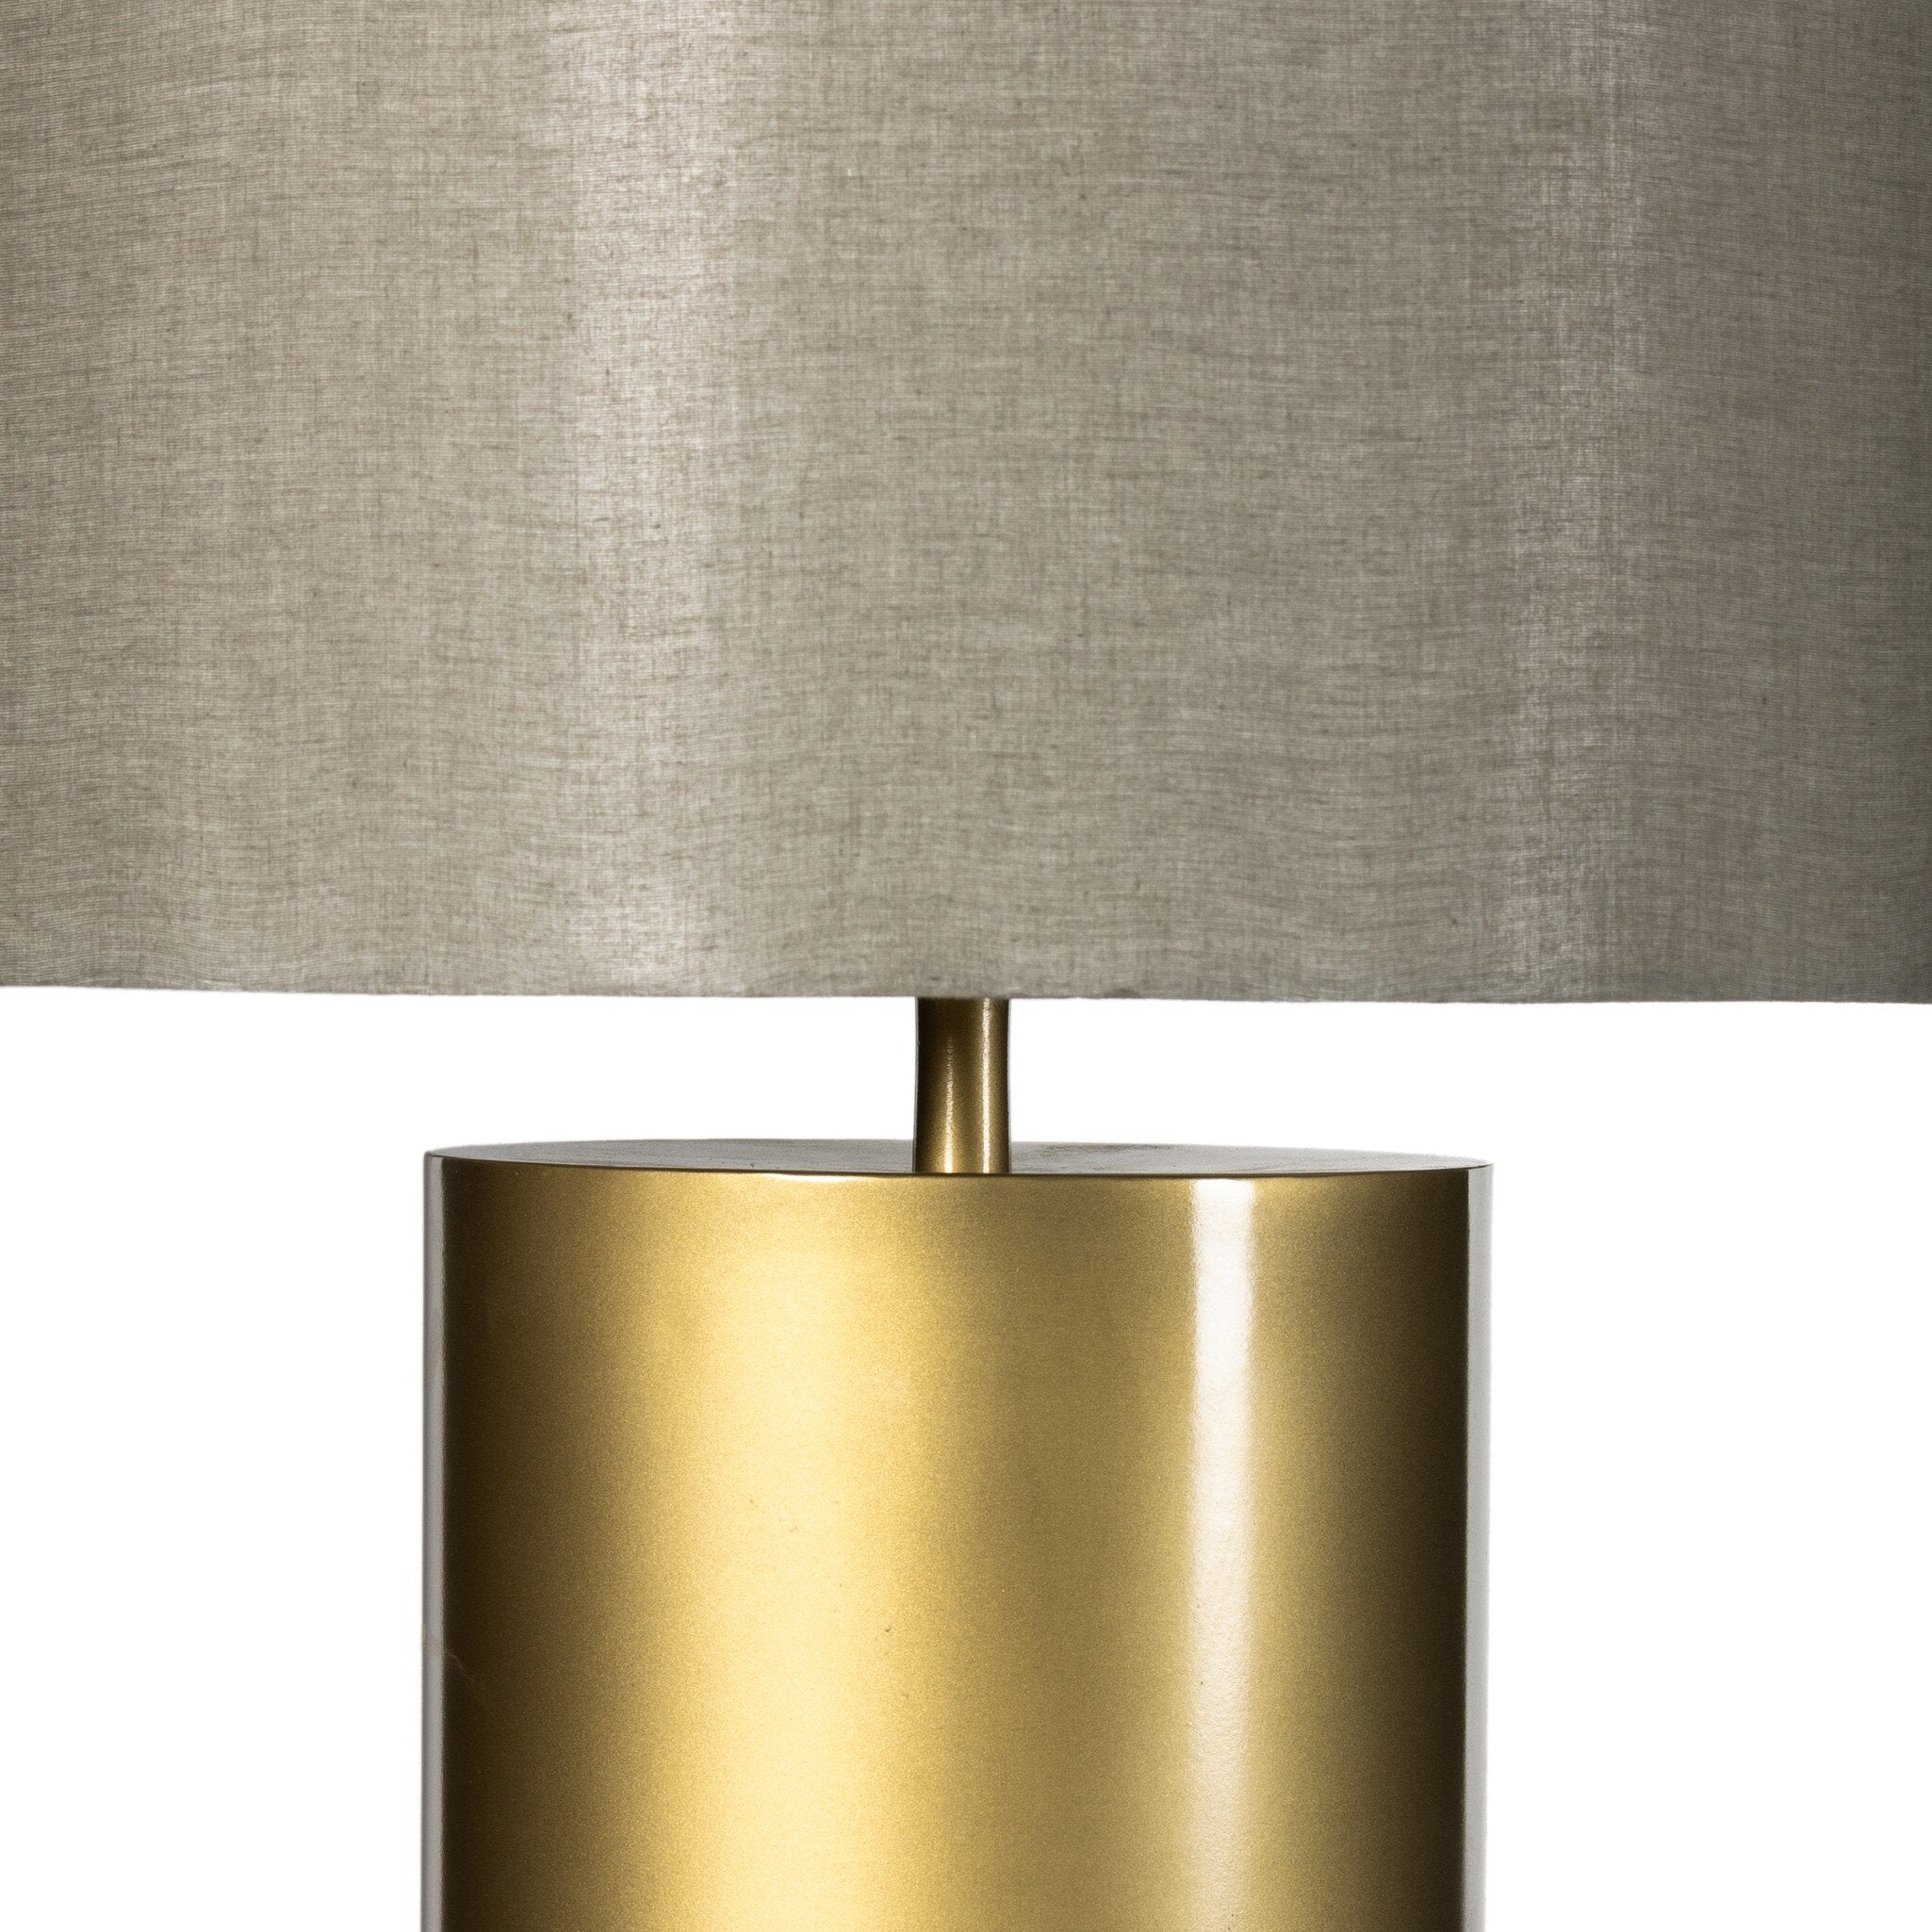 Cameron Floor Lamp - Ombre Antique Brass